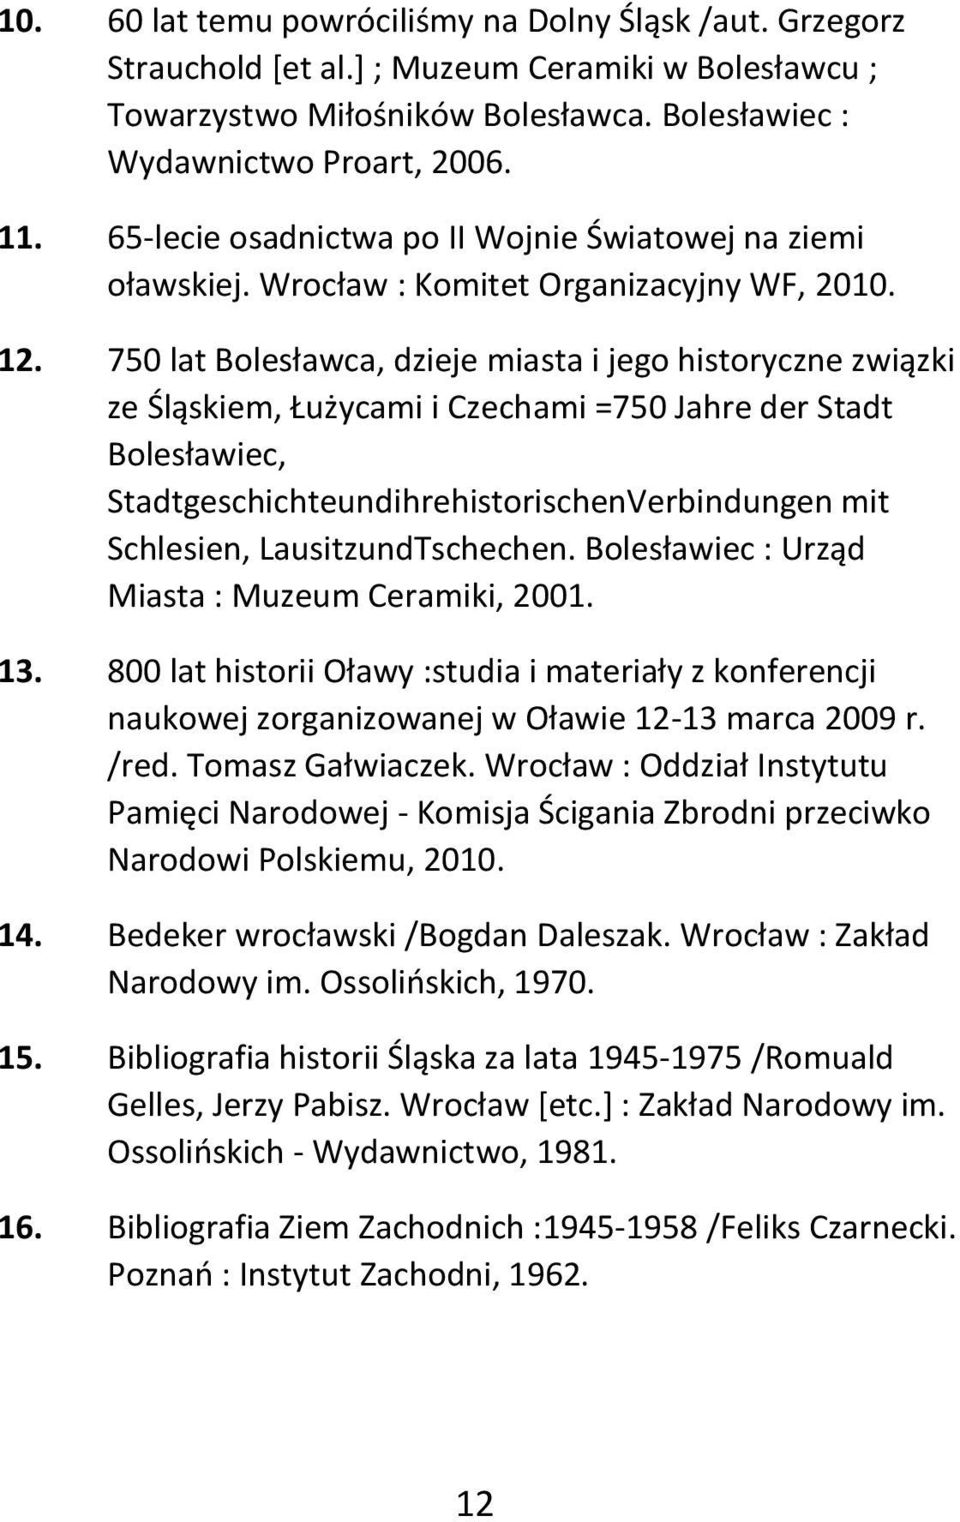 750 lat Bolesławca, dzieje miasta i jego historyczne związki ze Śląskiem, Łużycami i Czechami =750 Jahre der Stadt Bolesławiec, StadtgeschichteundihrehistorischenVerbindungen mit Schlesien,